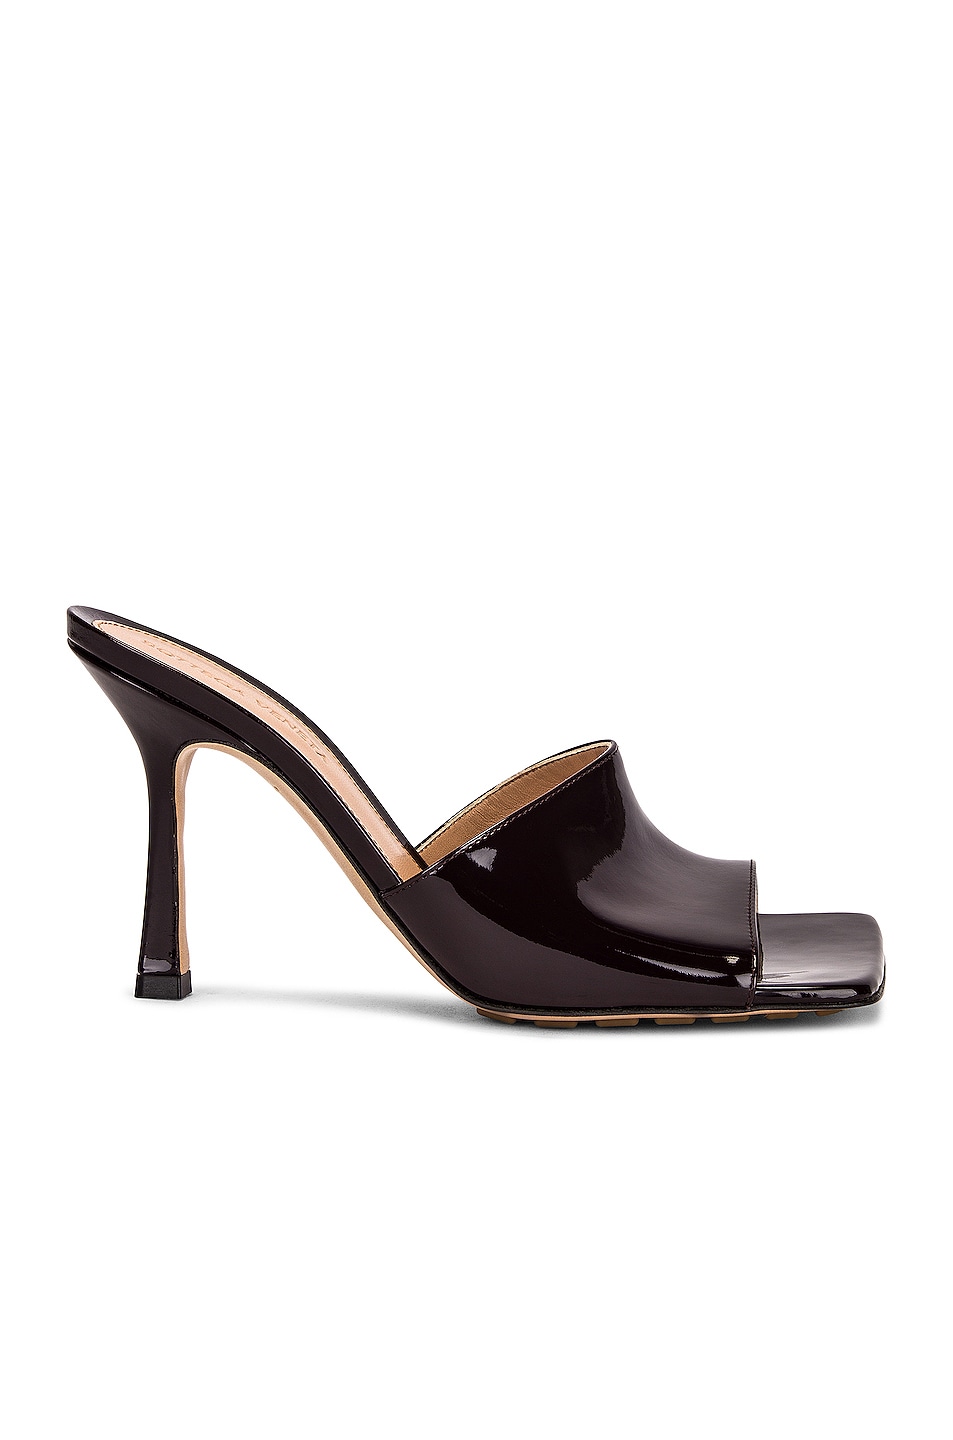 Bottega Veneta Stretch Gloss Sandals in Oxide | FWRD